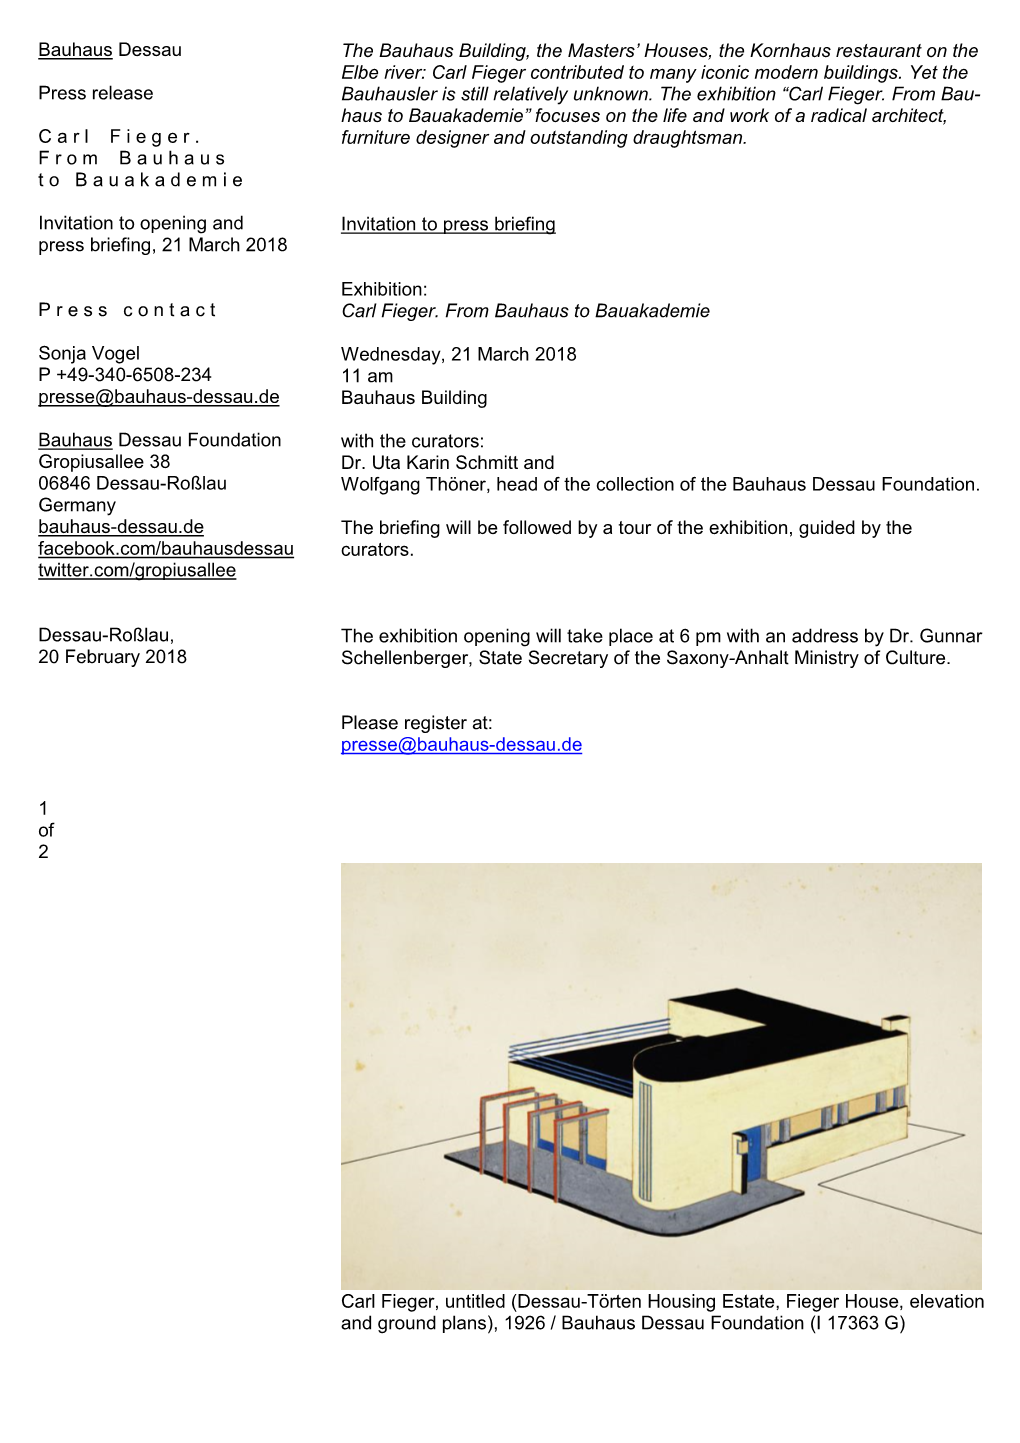 Bauhaus Dessau Press Release C a R L F I E G E R . F R O M B a U H a U S T O B a U a K a D E M I E Invitation To